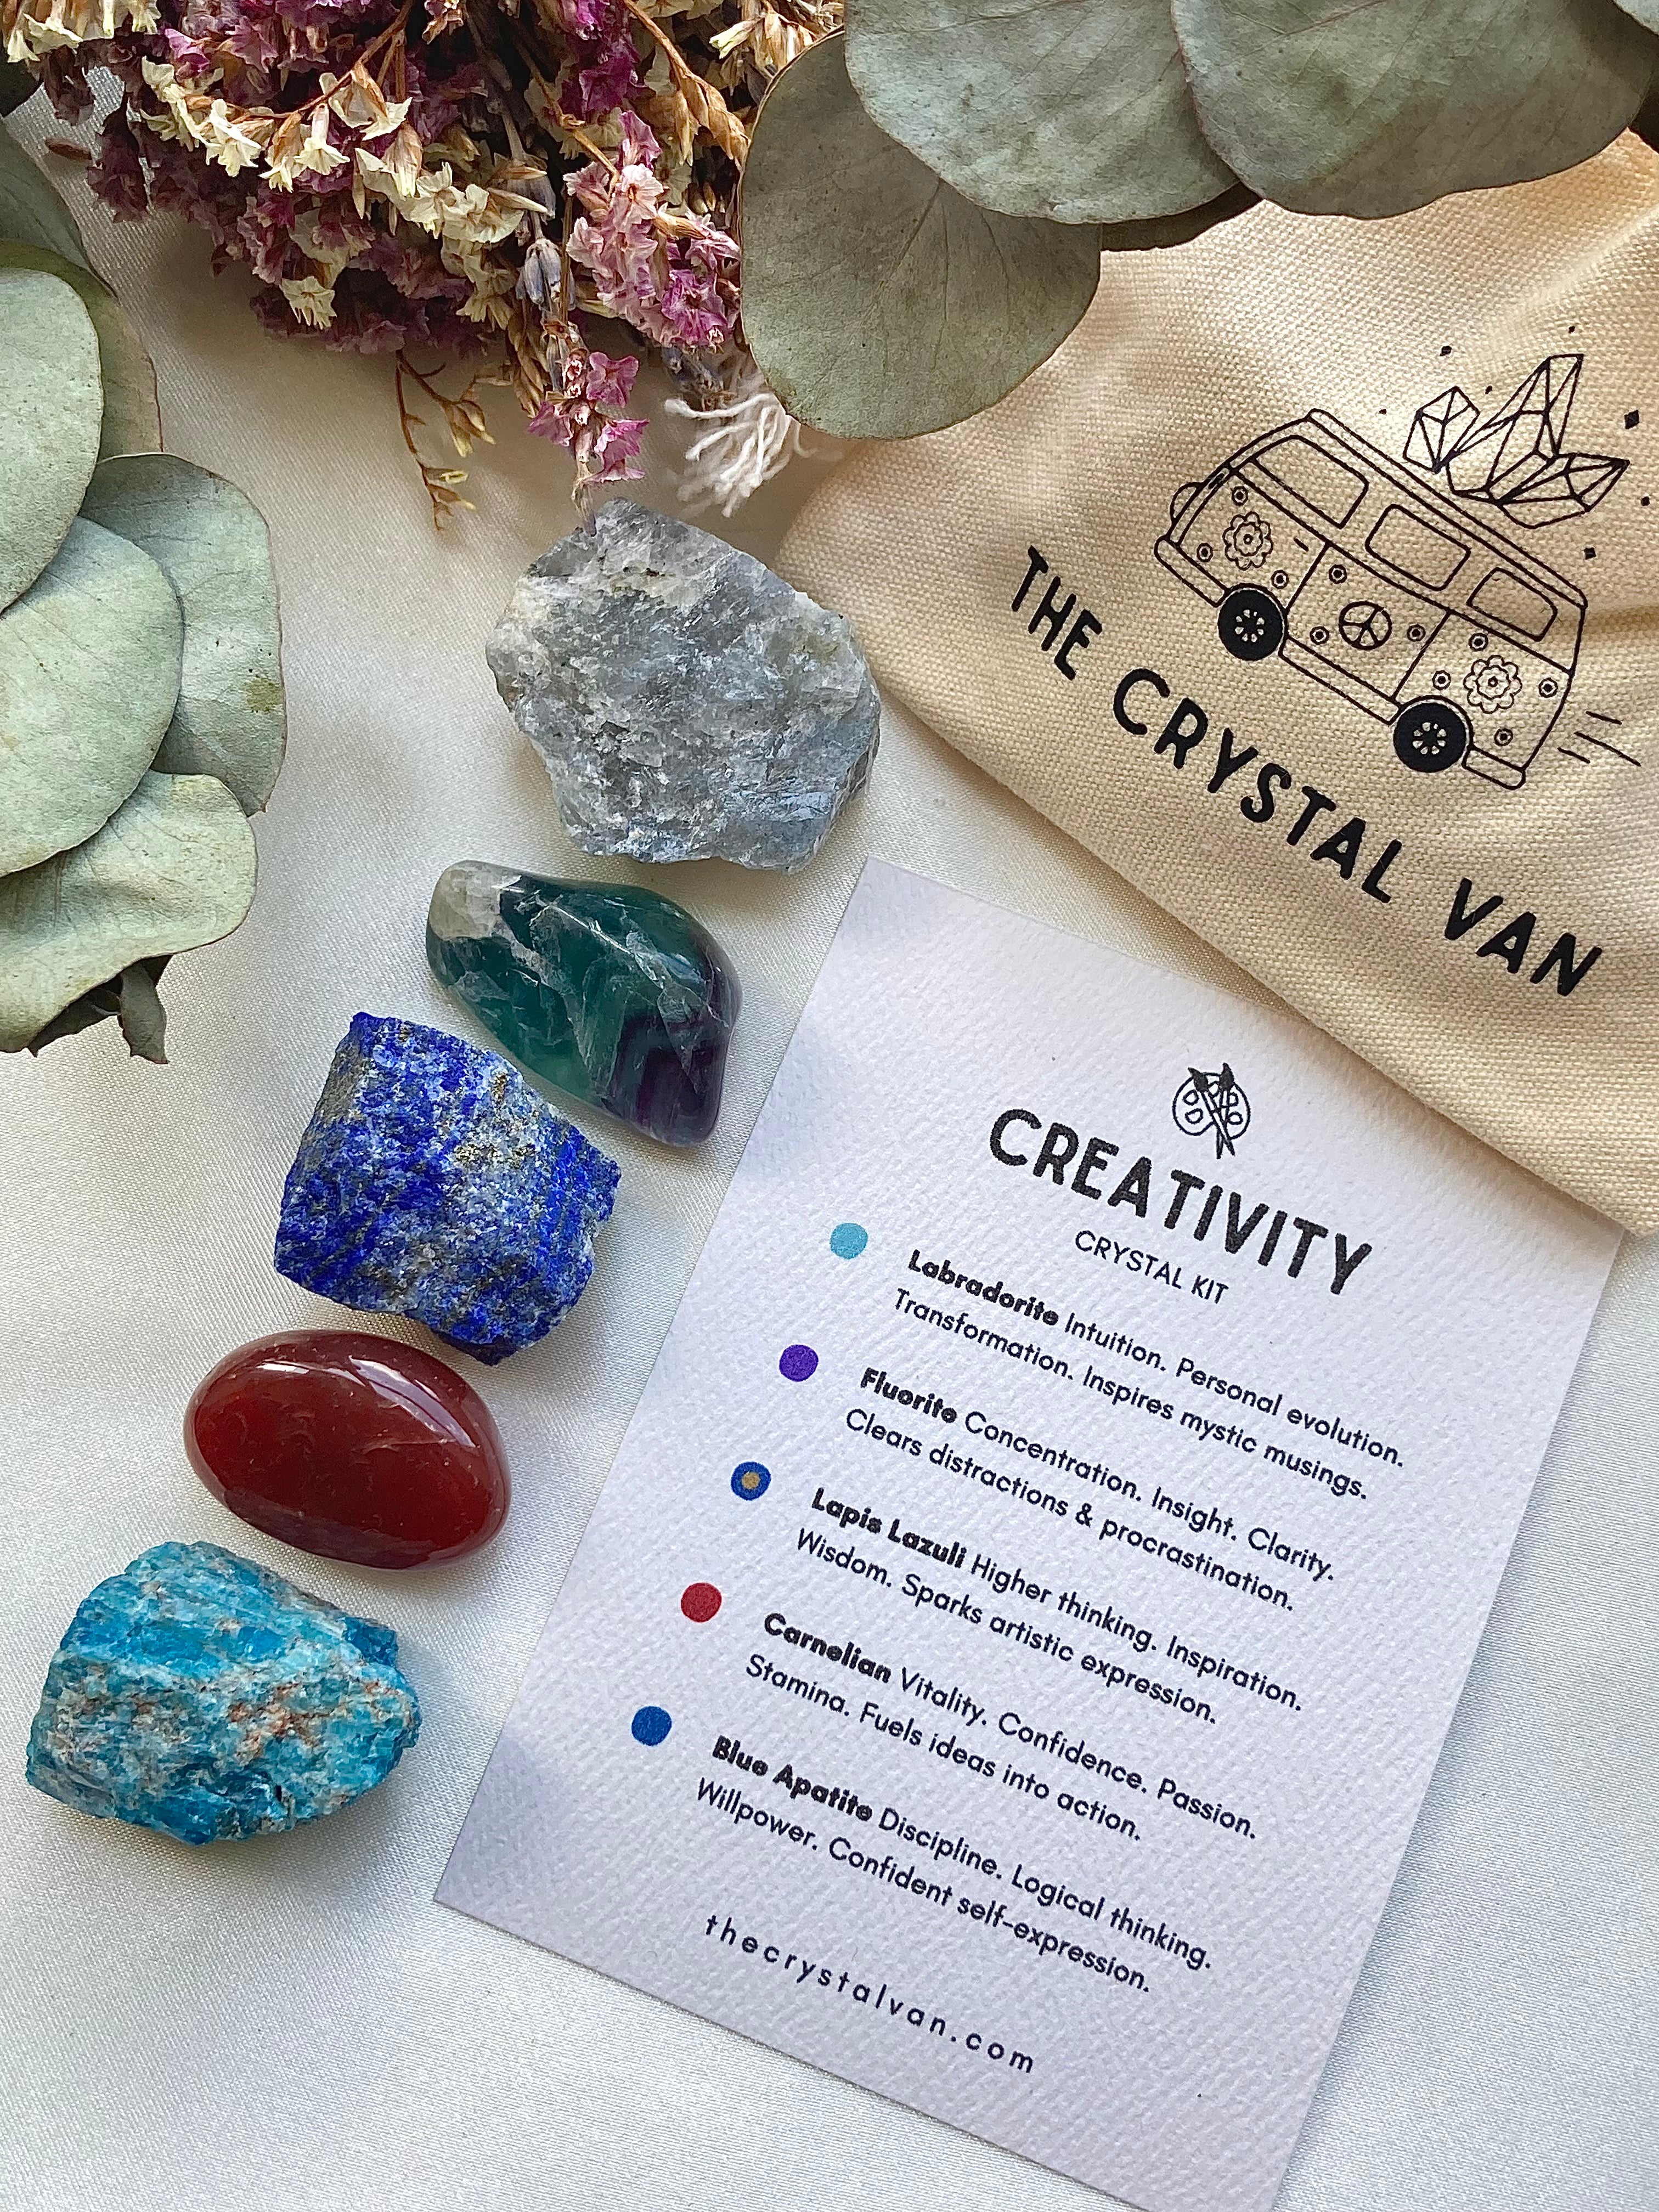 Crystal Creations Art Kit – New Horizons